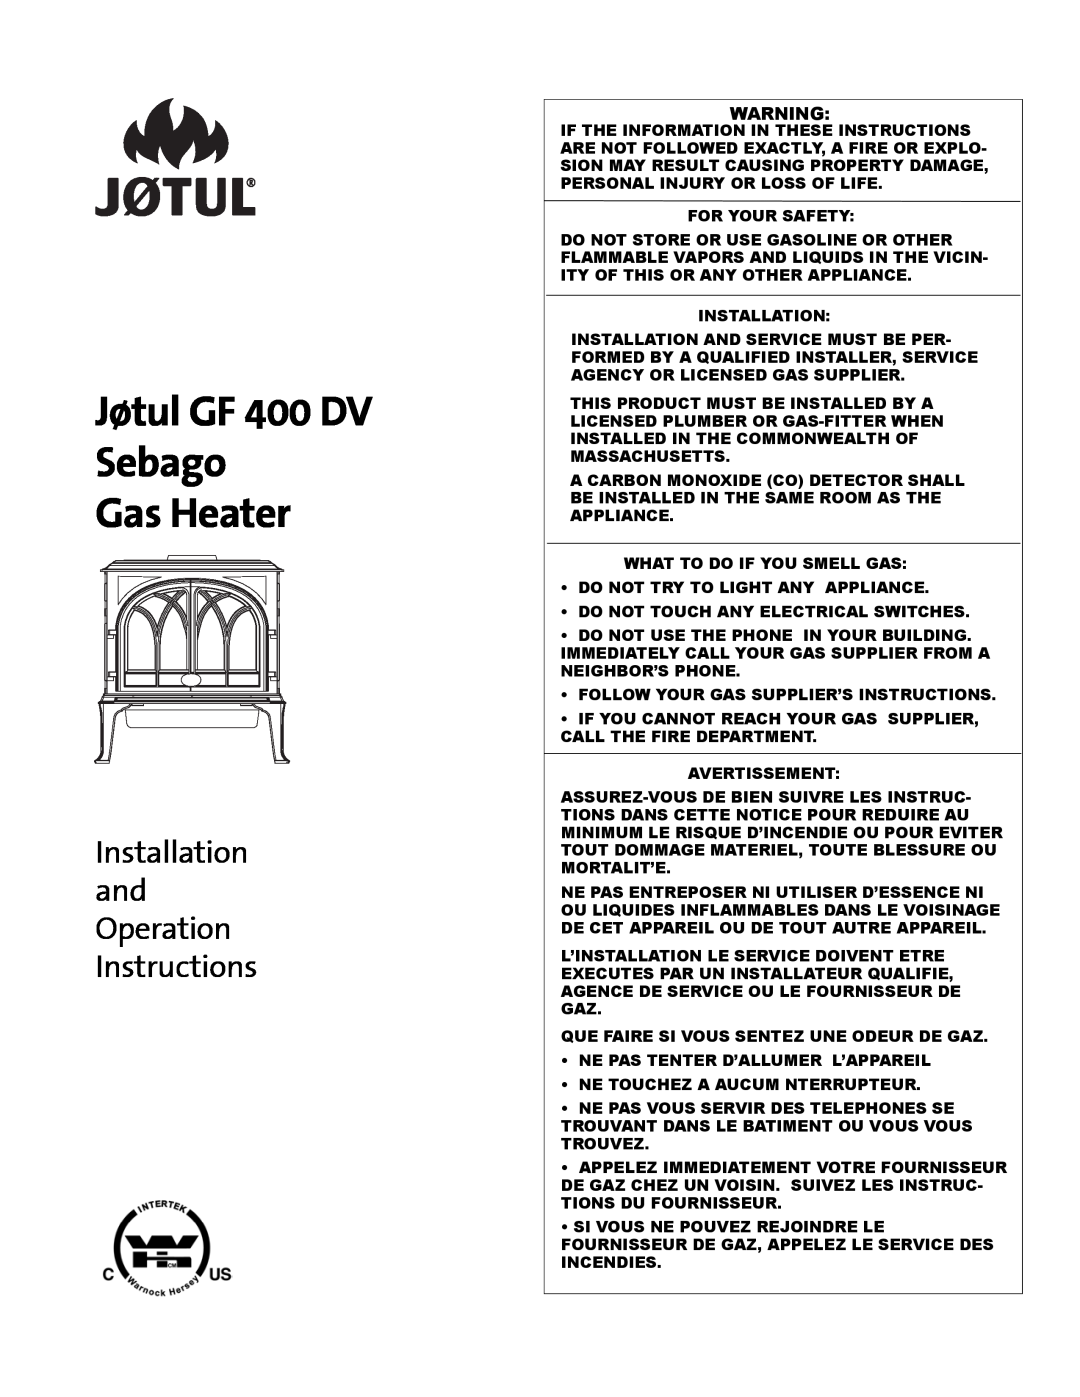 Jotul manual Jøtul GF 400 DV Sebago Gas Heater, Installation and Operation Instructions 